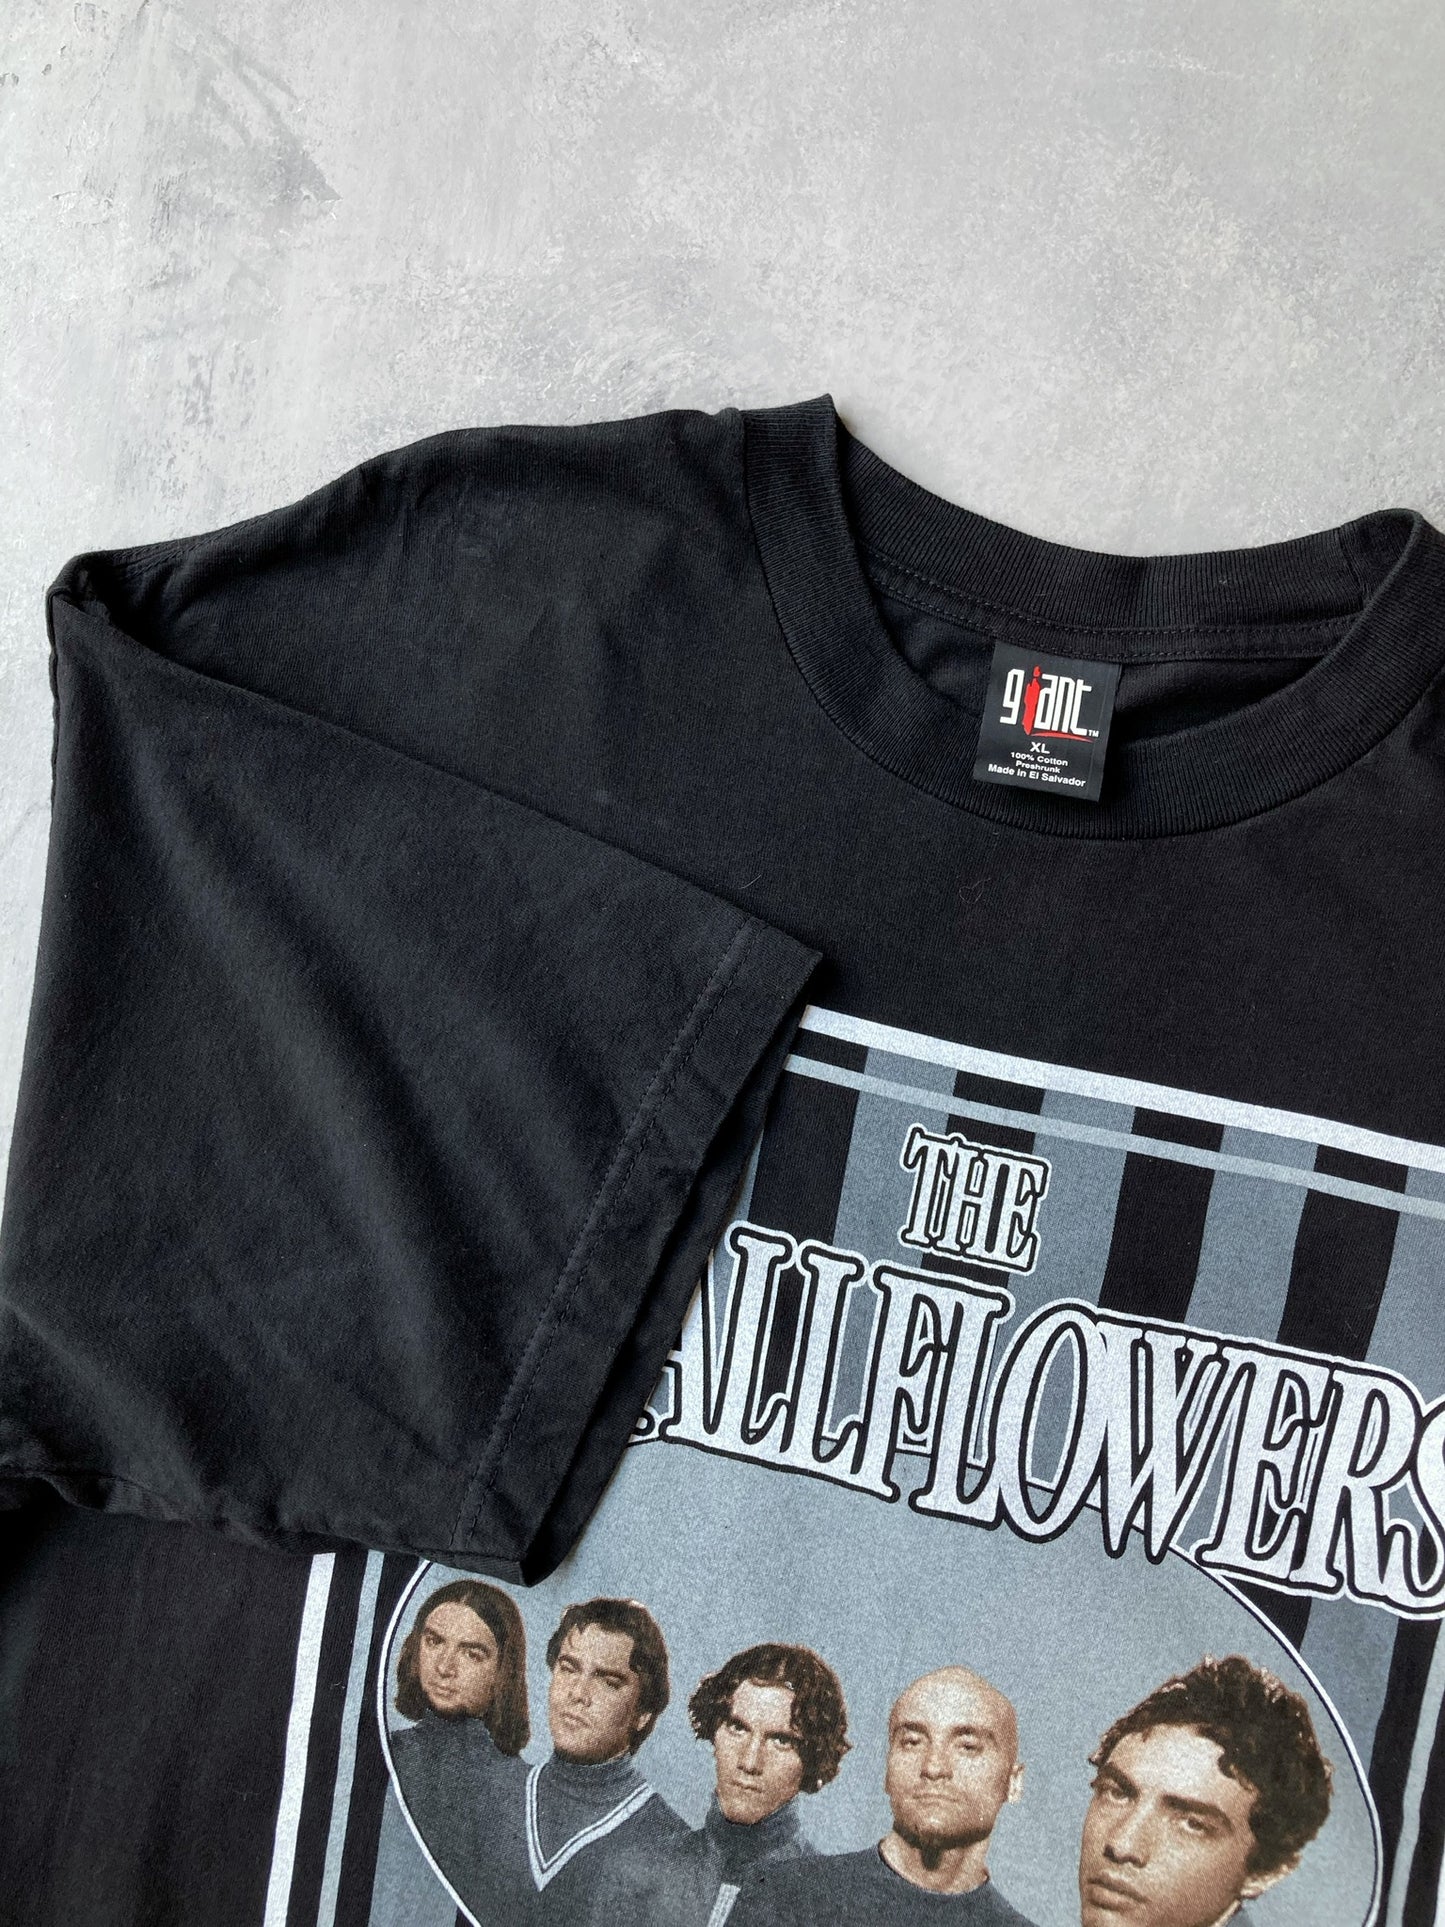 The Wallflowers Tour '97 - XL